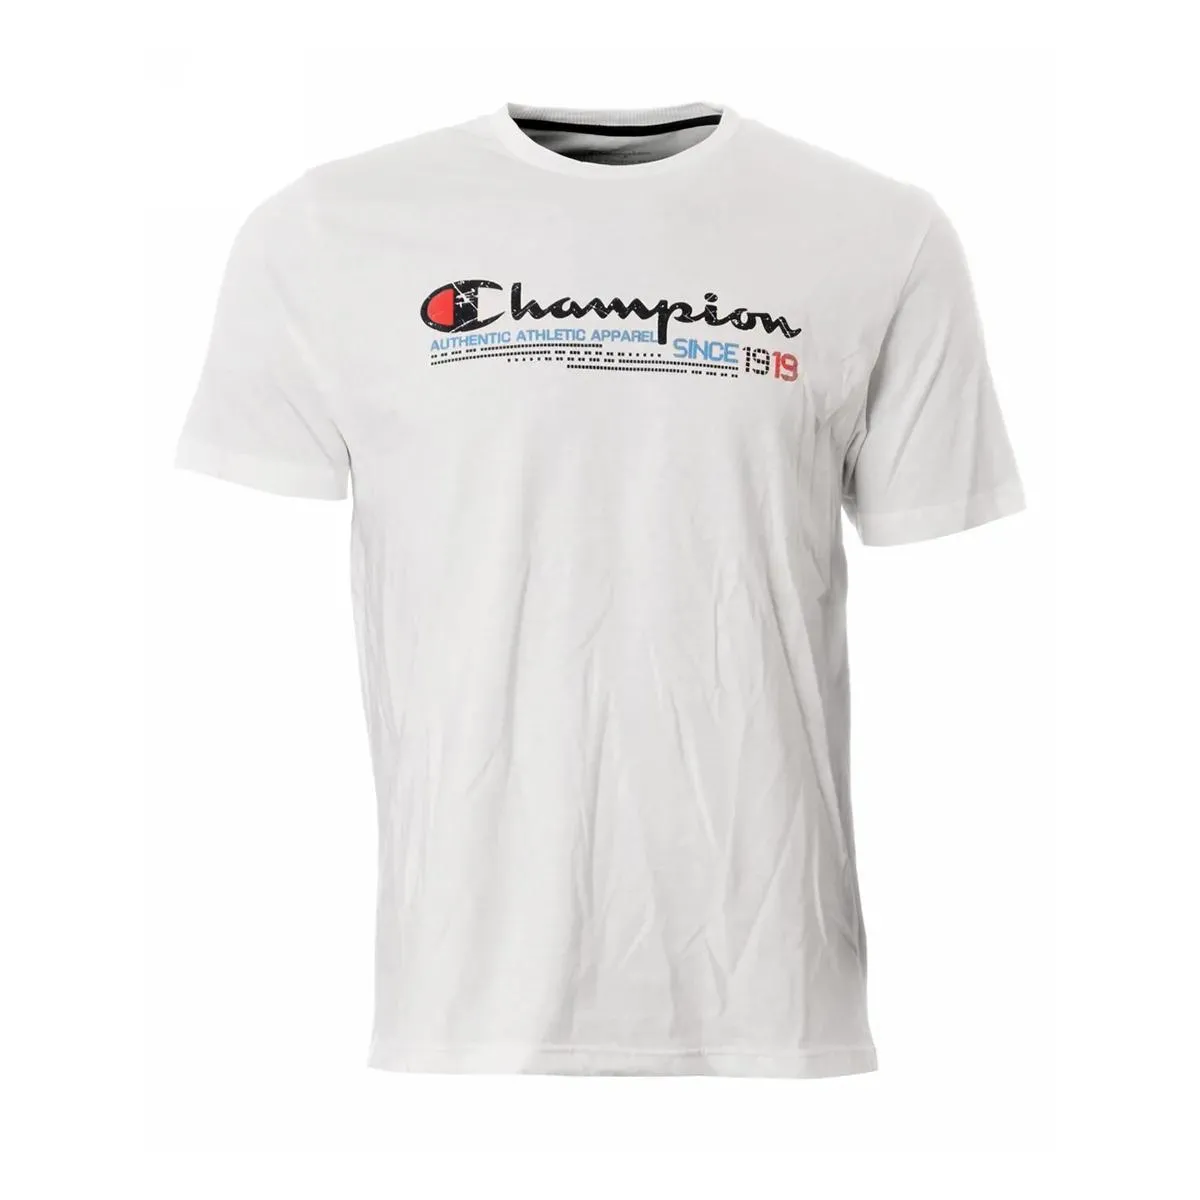 Champion T-shirt CHAMP TEE 